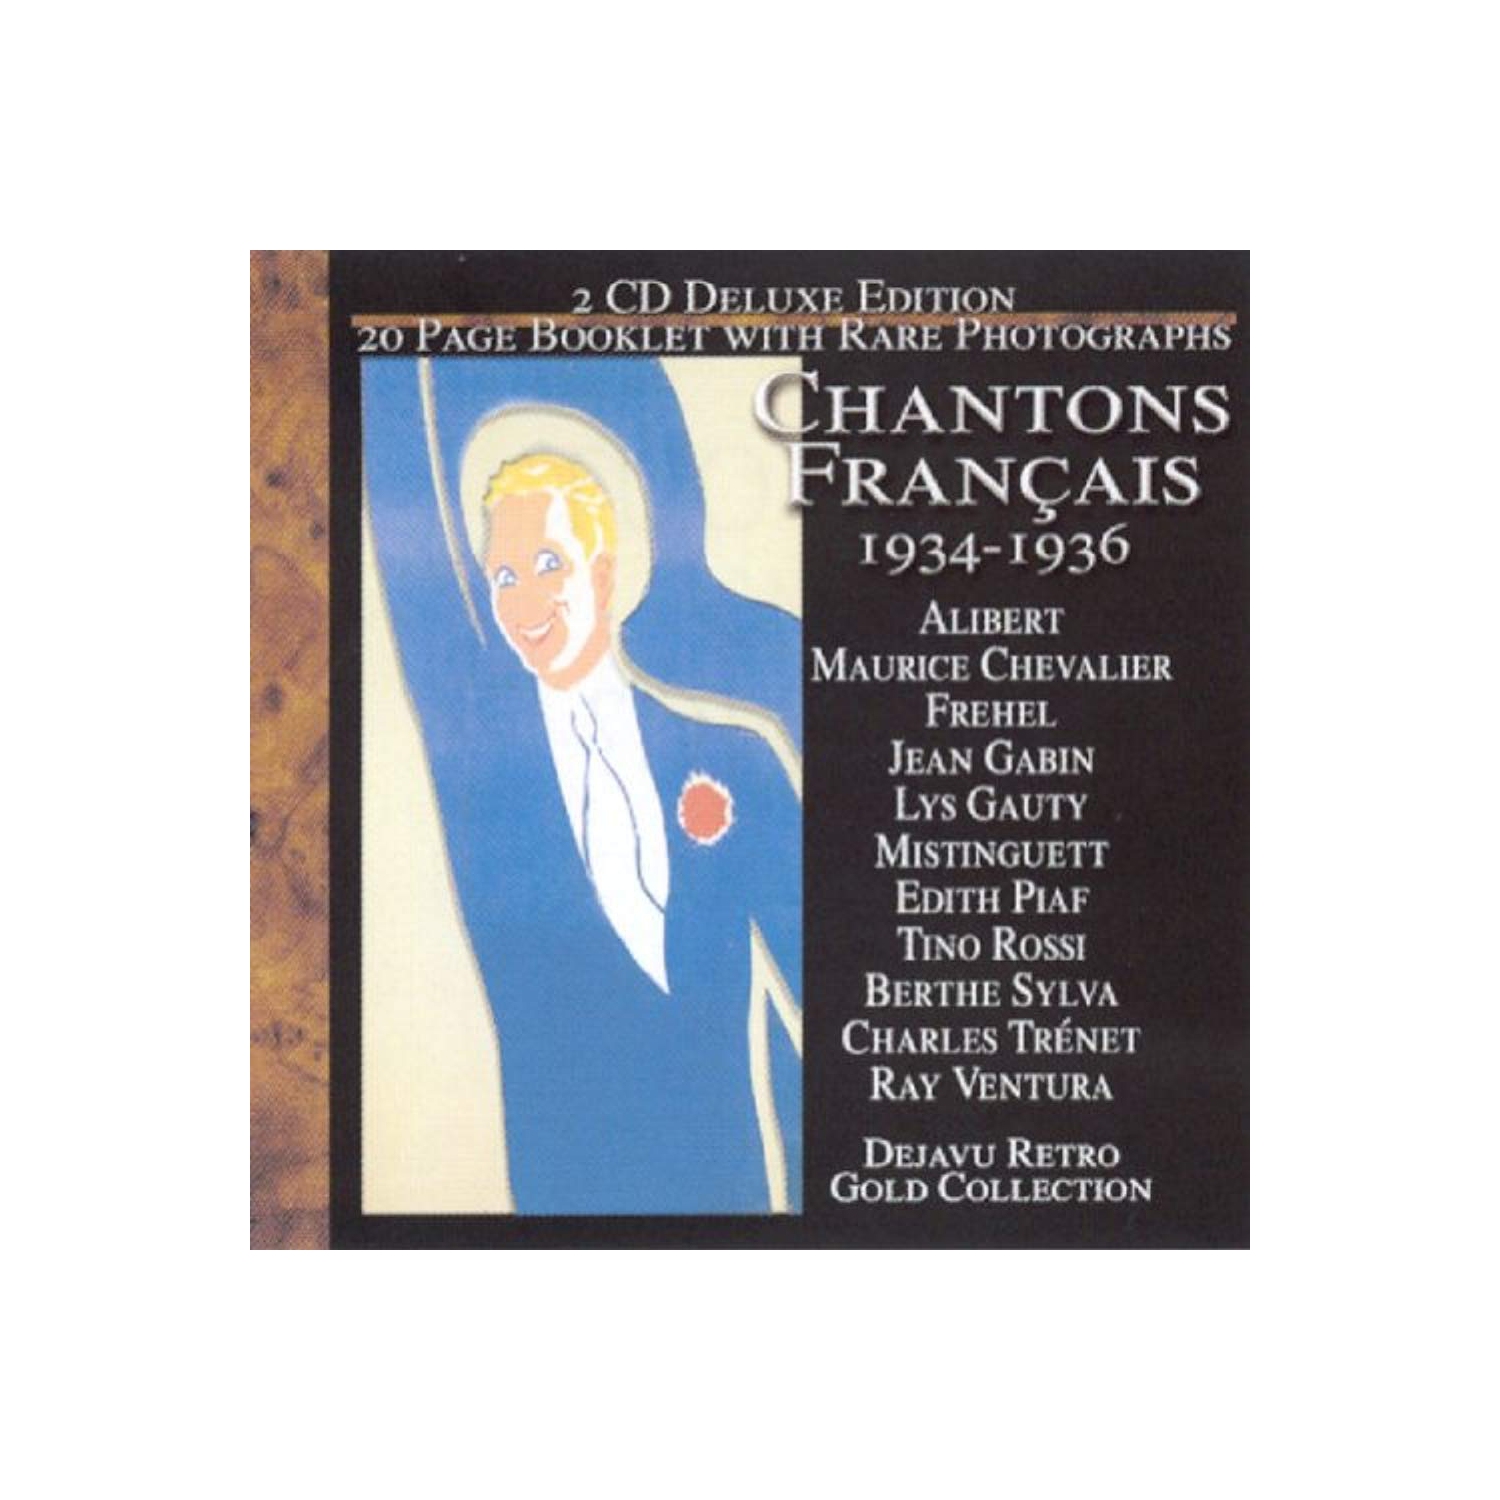 Chantons Français 1934-1936 (Dejavu Retro Gold Collection) [Audio CD] Maurice Chevalier; Frehel; Jean Gabin;